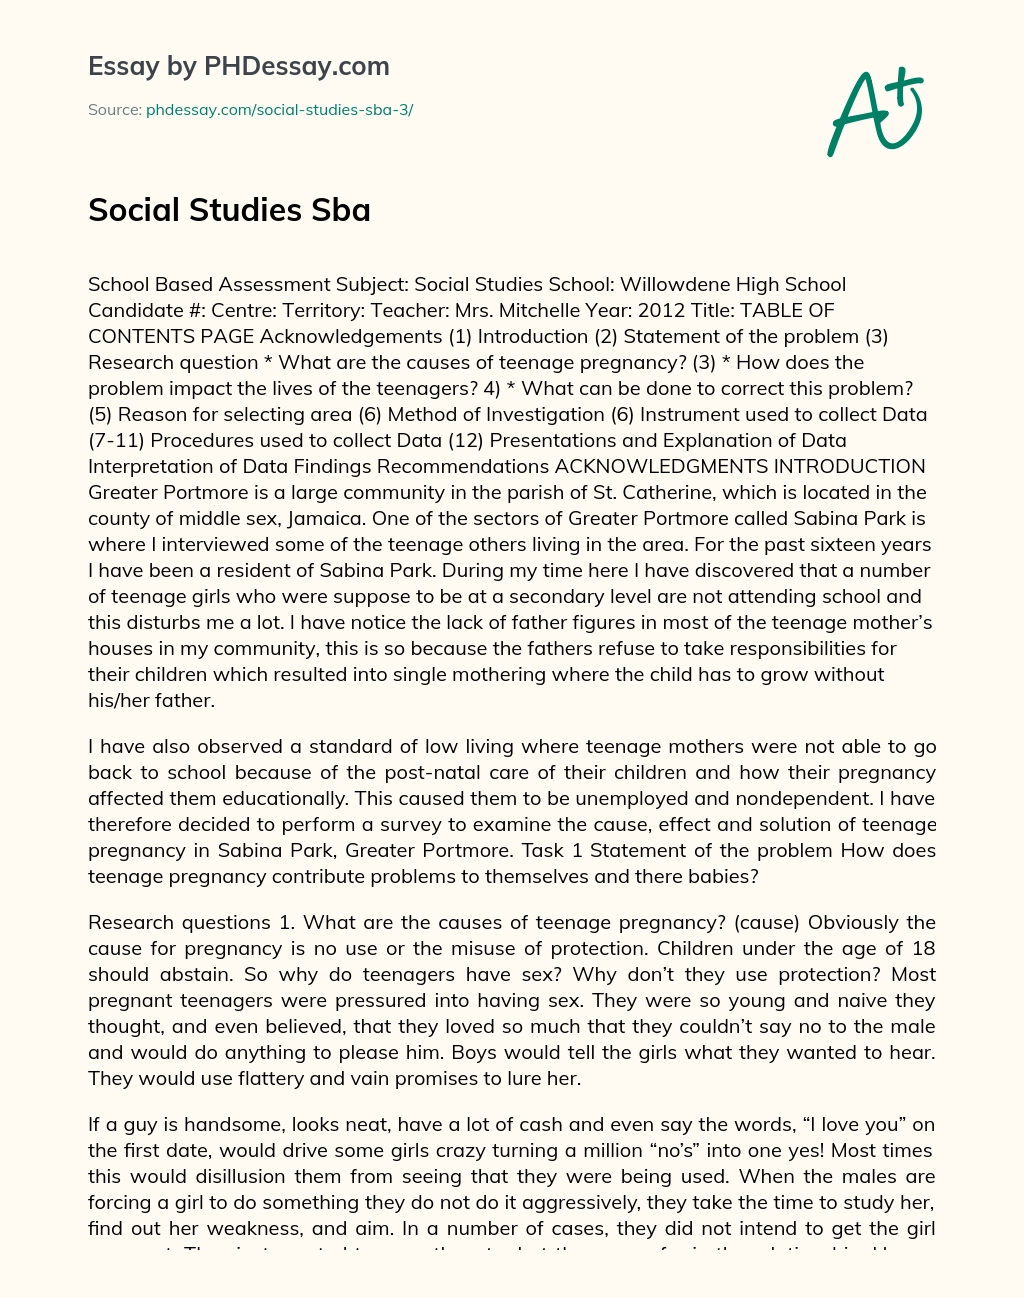 Social Studies Sba essay